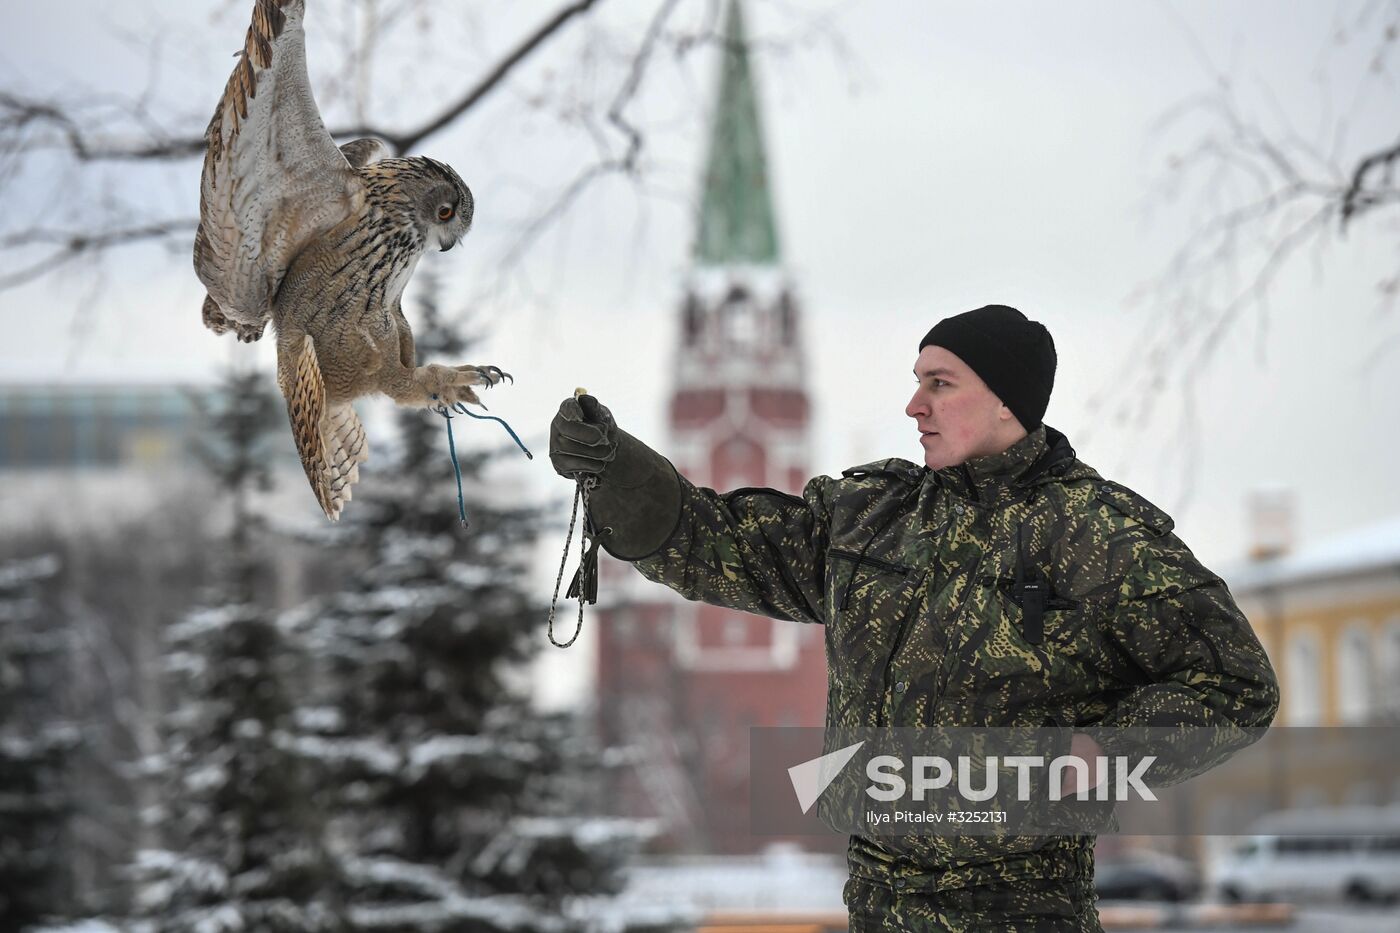 Kremlin's falcon service